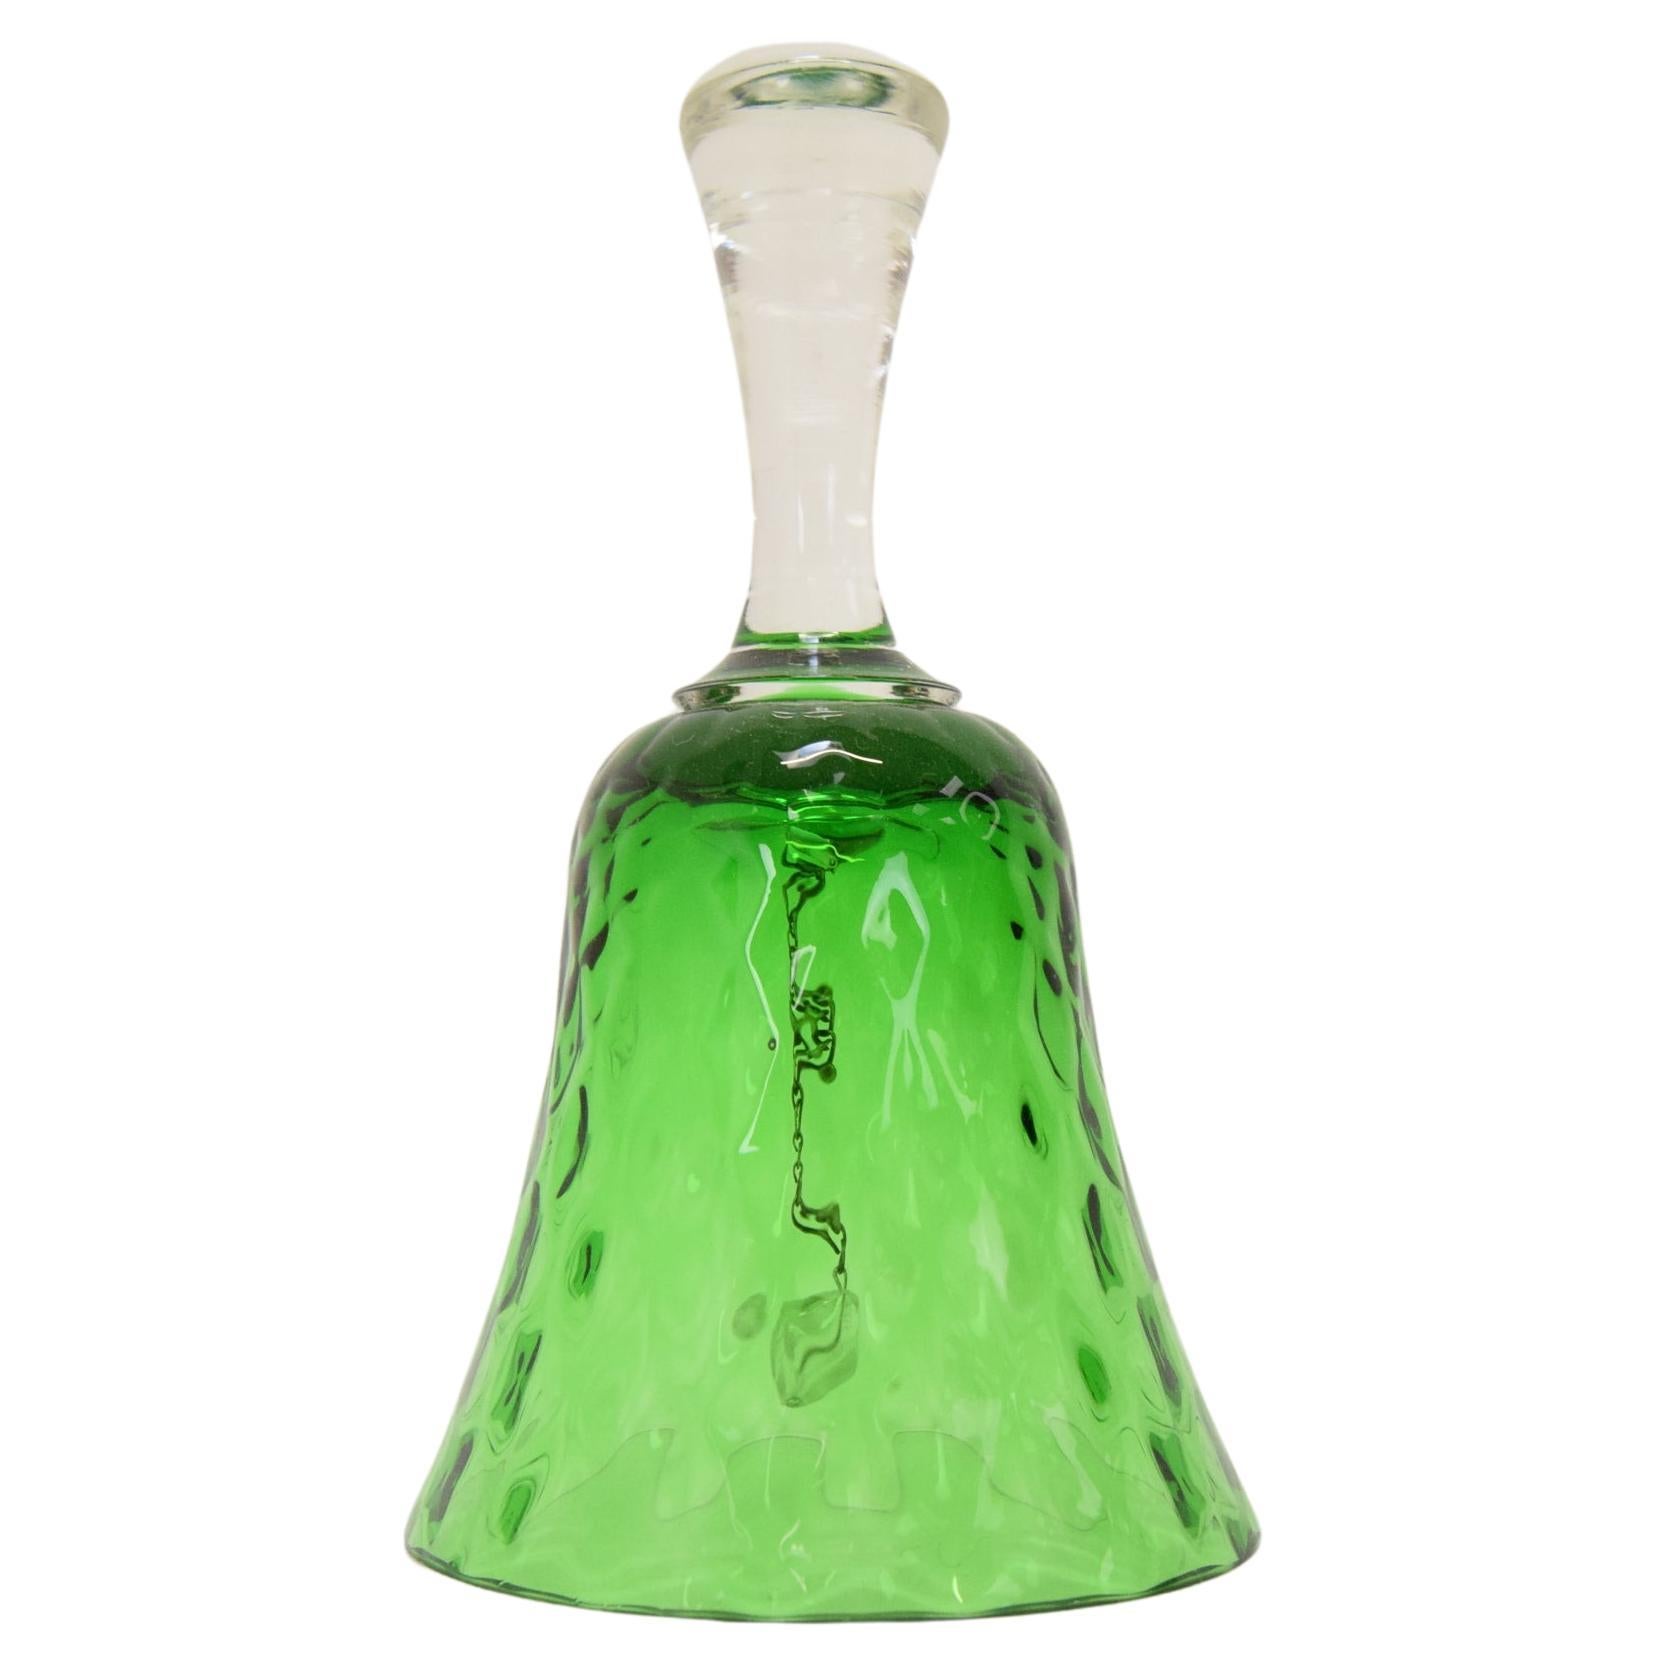 Vintage Glass Bell, Glasswork Novy Bor, 1950's. 